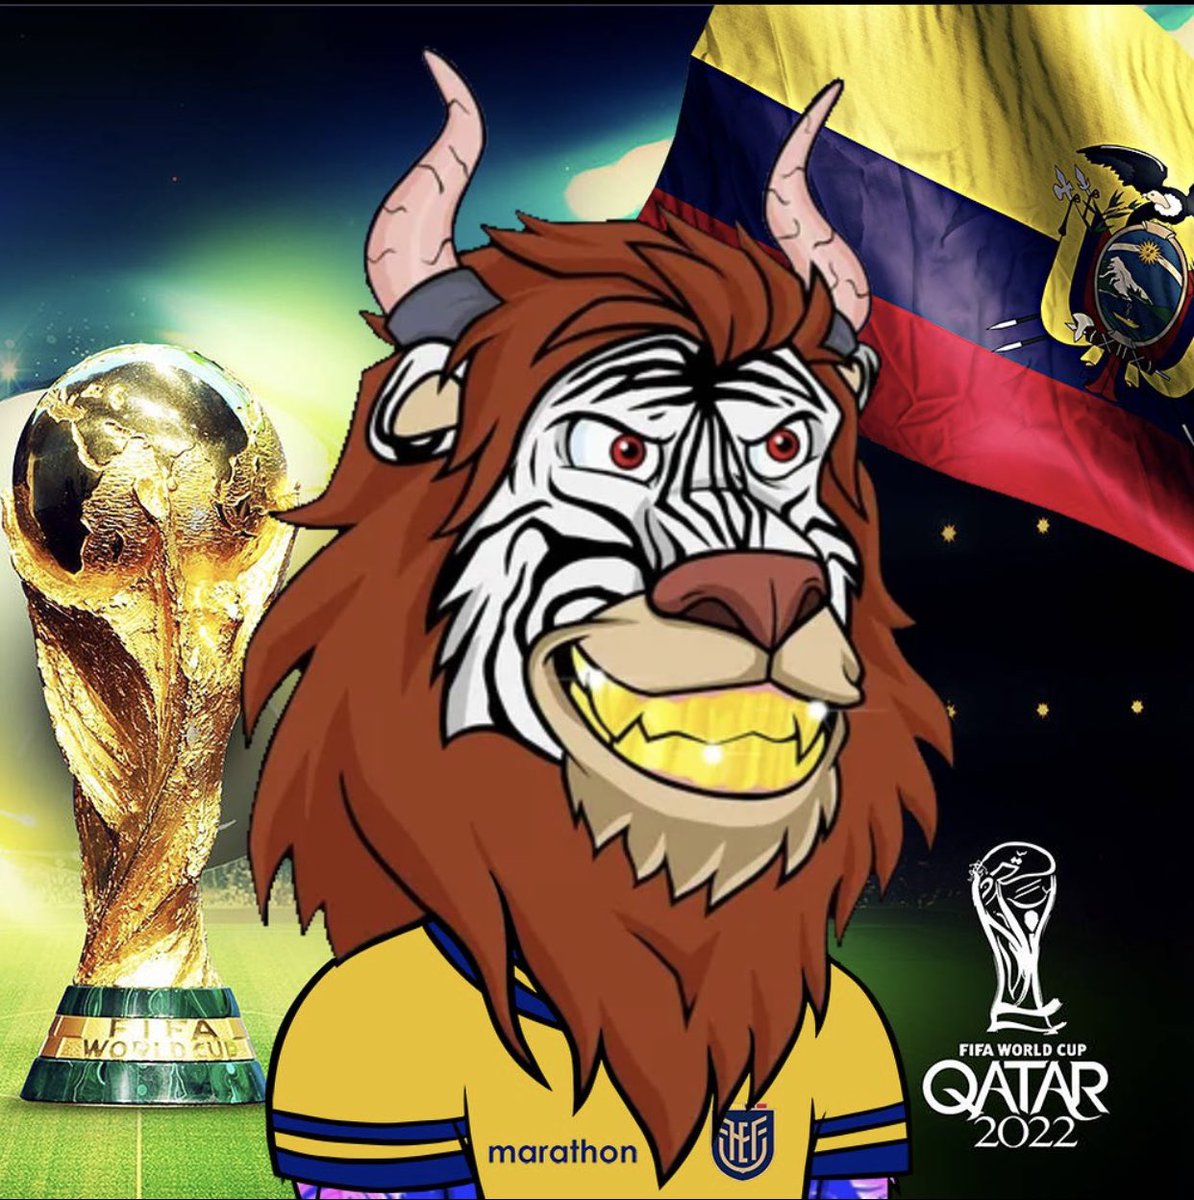 Thanks @GalaxyLionsNFT & @MegaHzNFT  for this awesome edit of the future Fifa World Cup champions 2022 !! 🇪🇨👑

#NFTs #QatarWorldCup2022 #Ecuador #EcuadorvsQatar